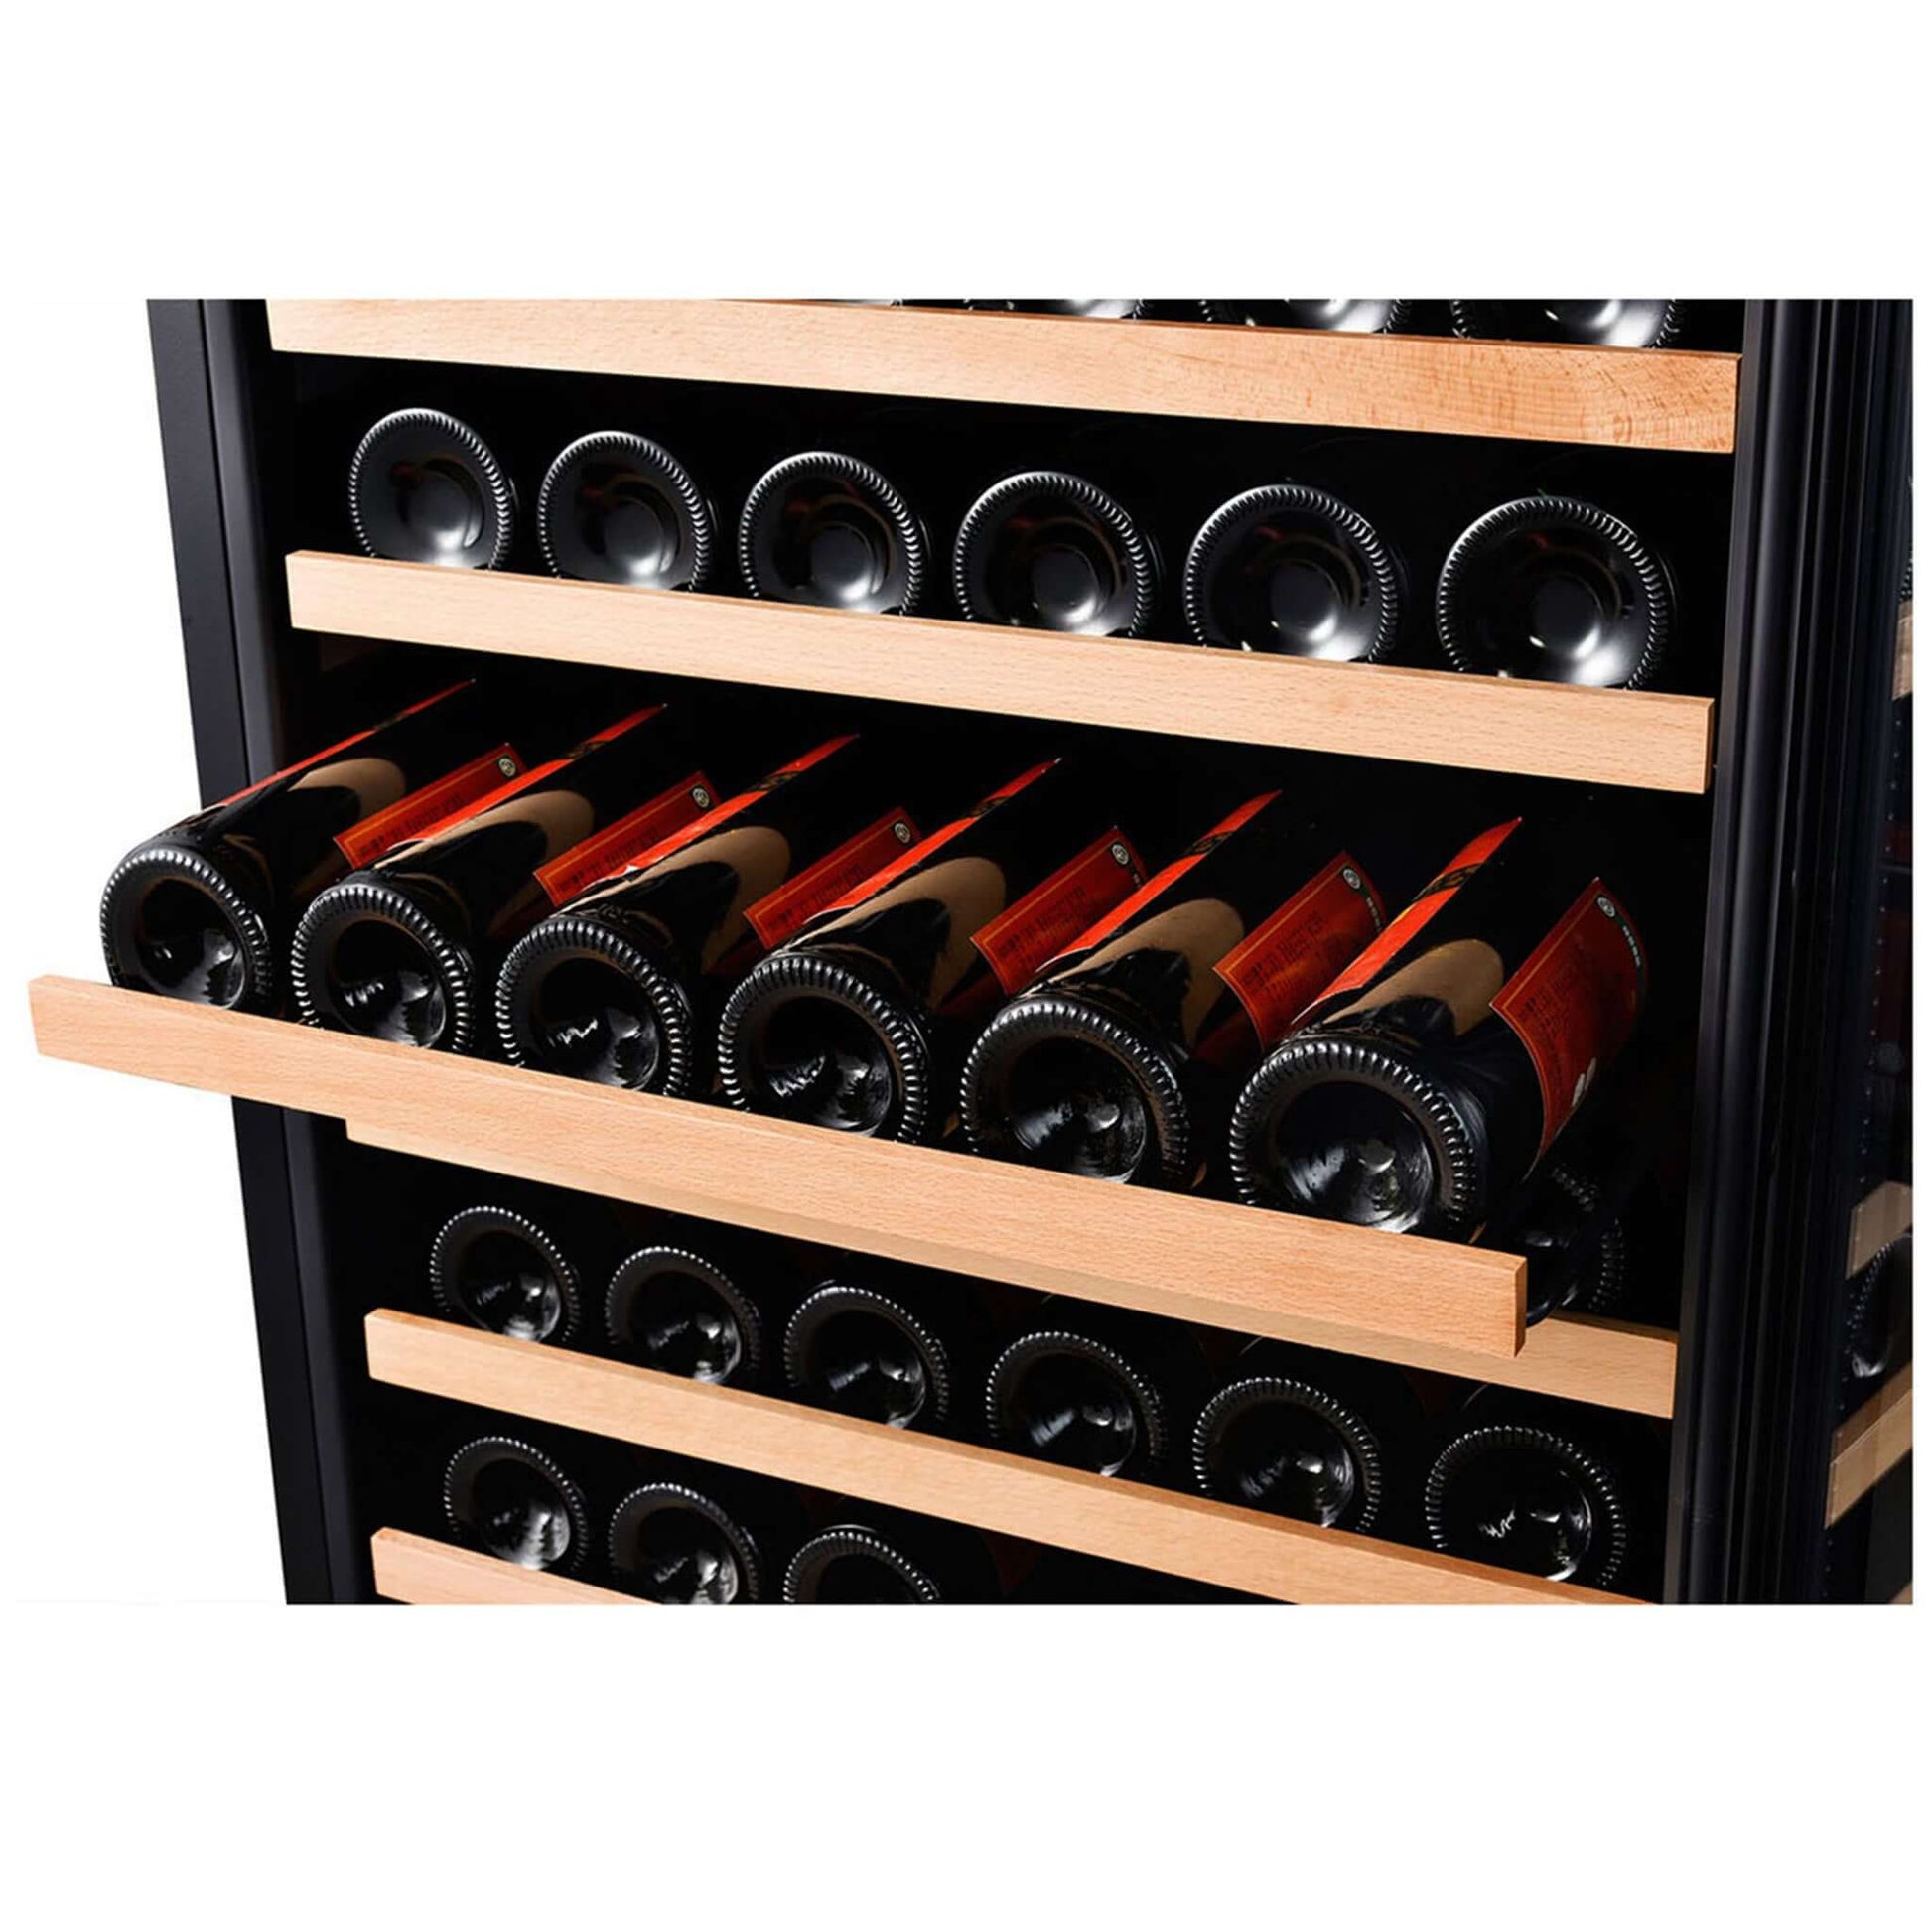 Smith & Hanks 166 Bottle Dual Zone Stainless Steel Wine Refrigerator